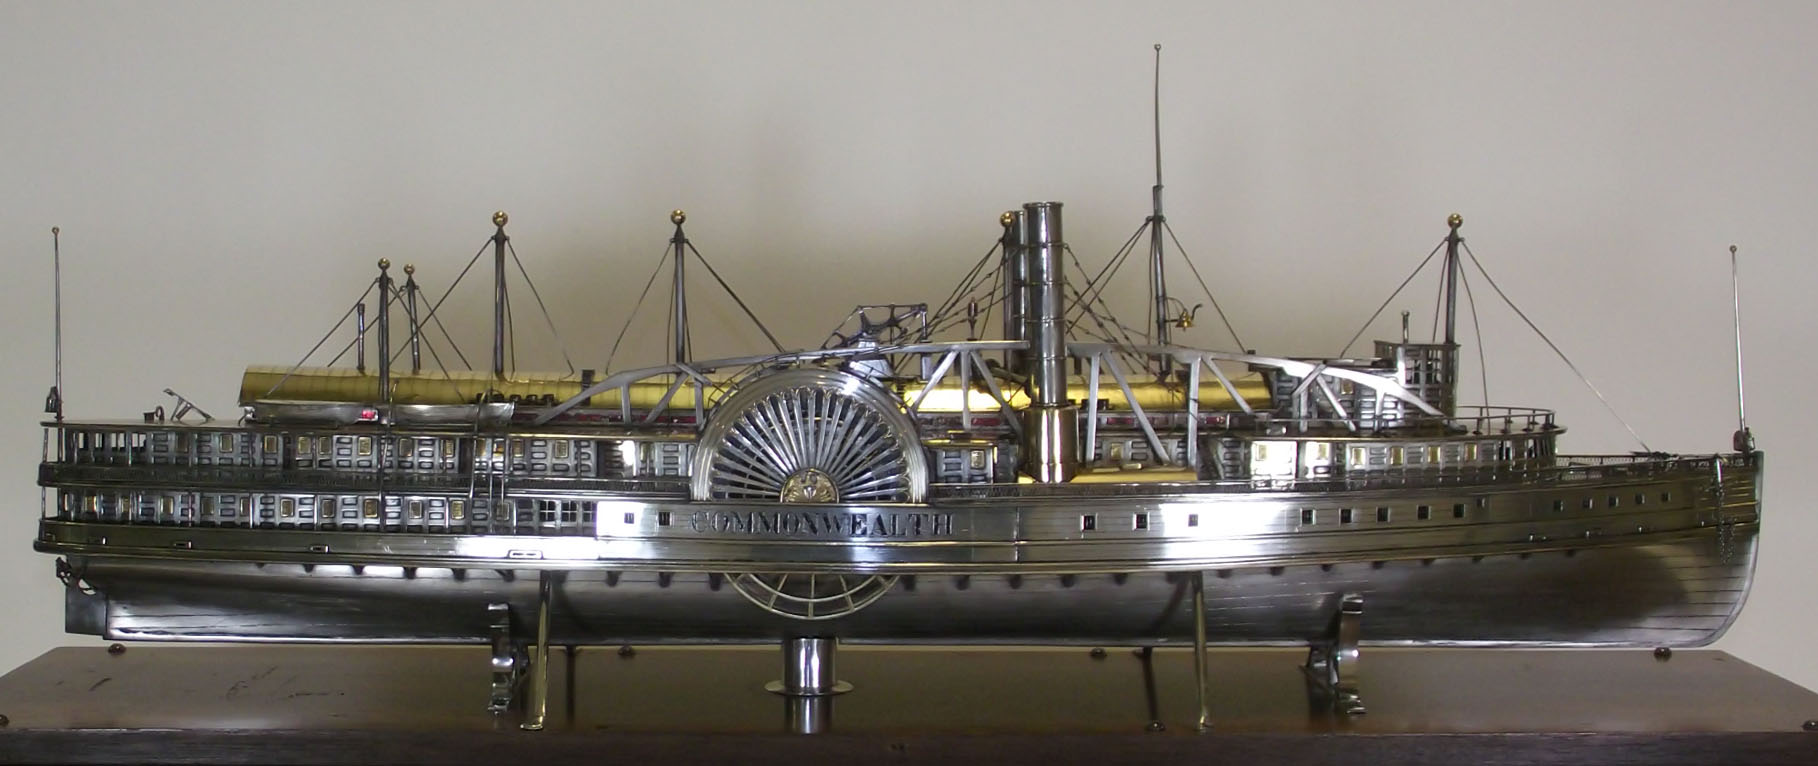 File:Steamboat model commonwealth music box.jpg - Wikimedia Commons